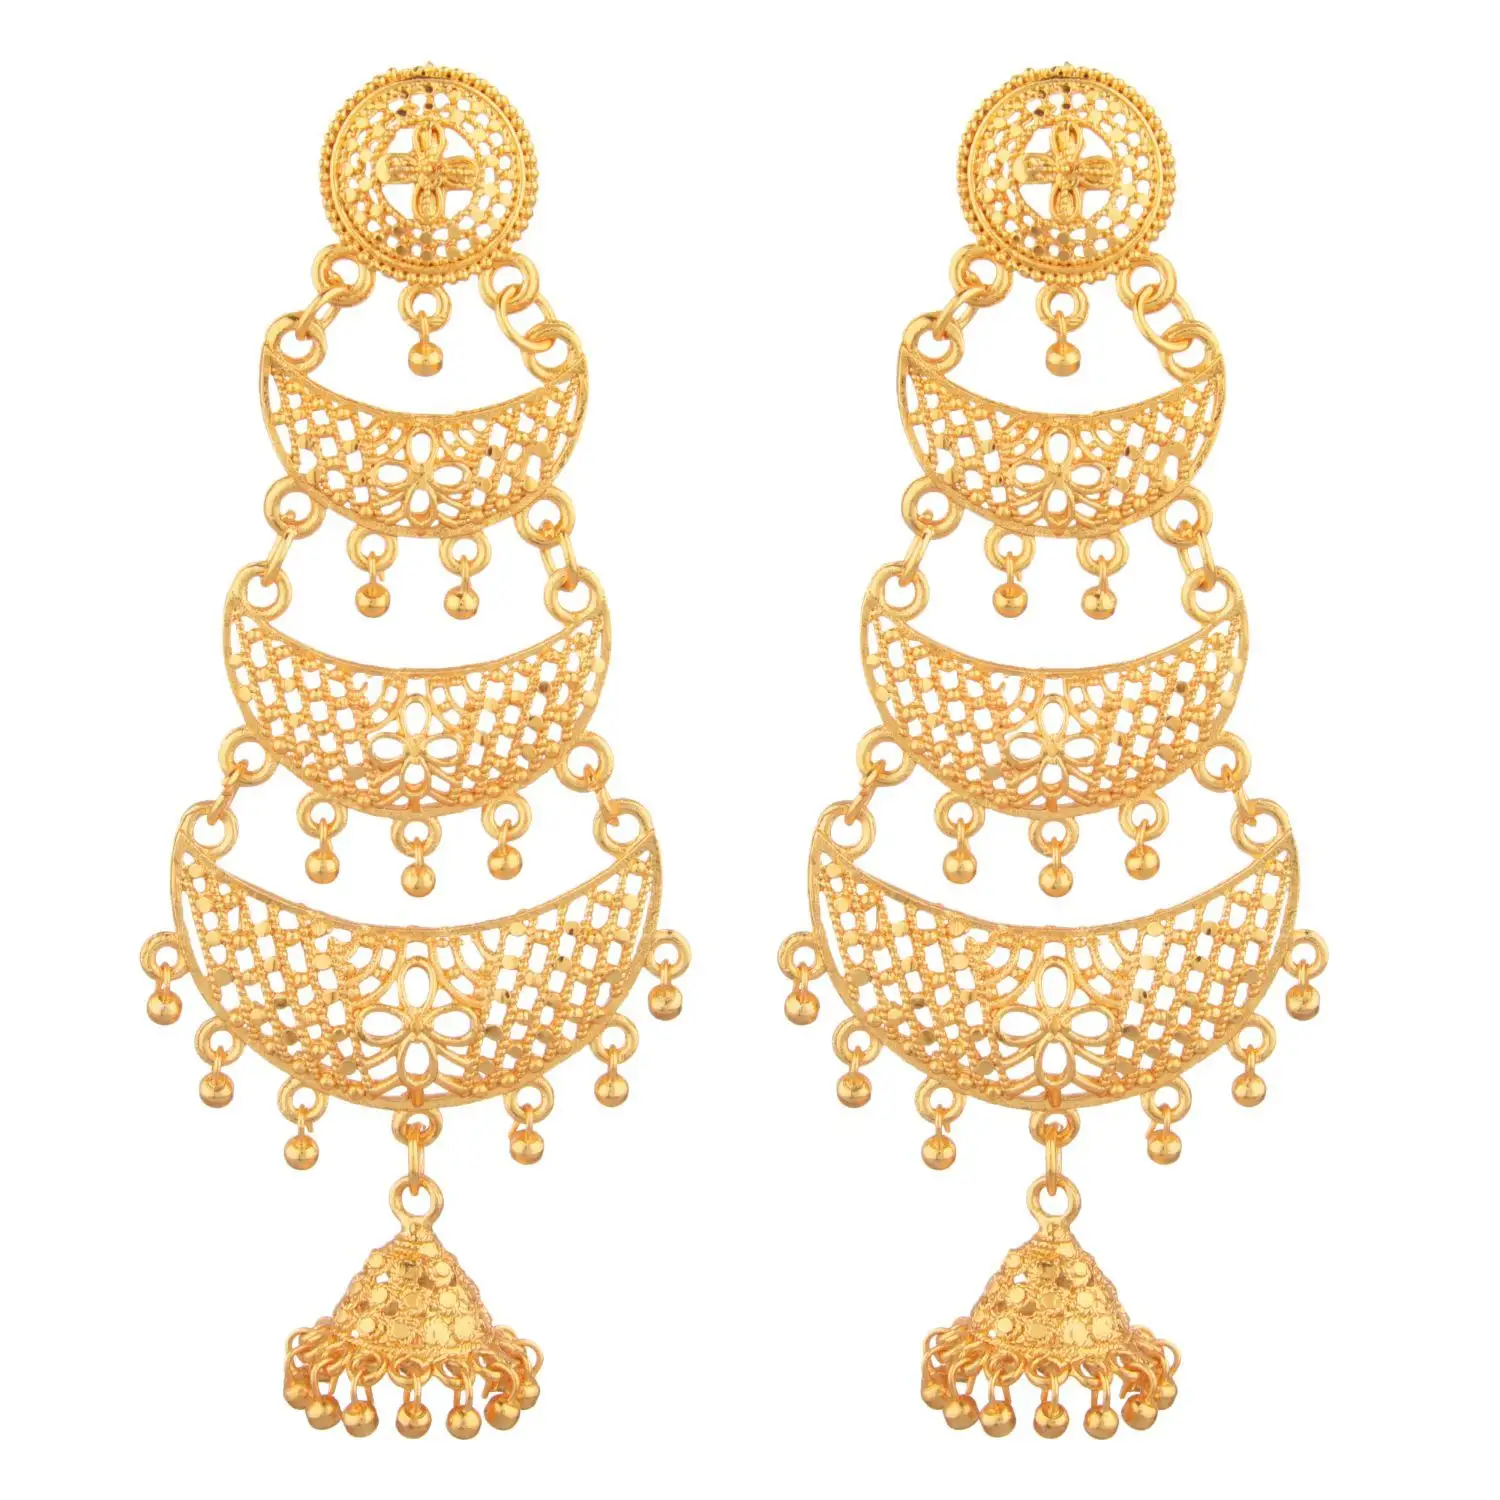 Indian Earrings Jewelry Gold Plated Chandbali Layered Jhumki Drop Earrings Jewellery Wholesale Manufacturer